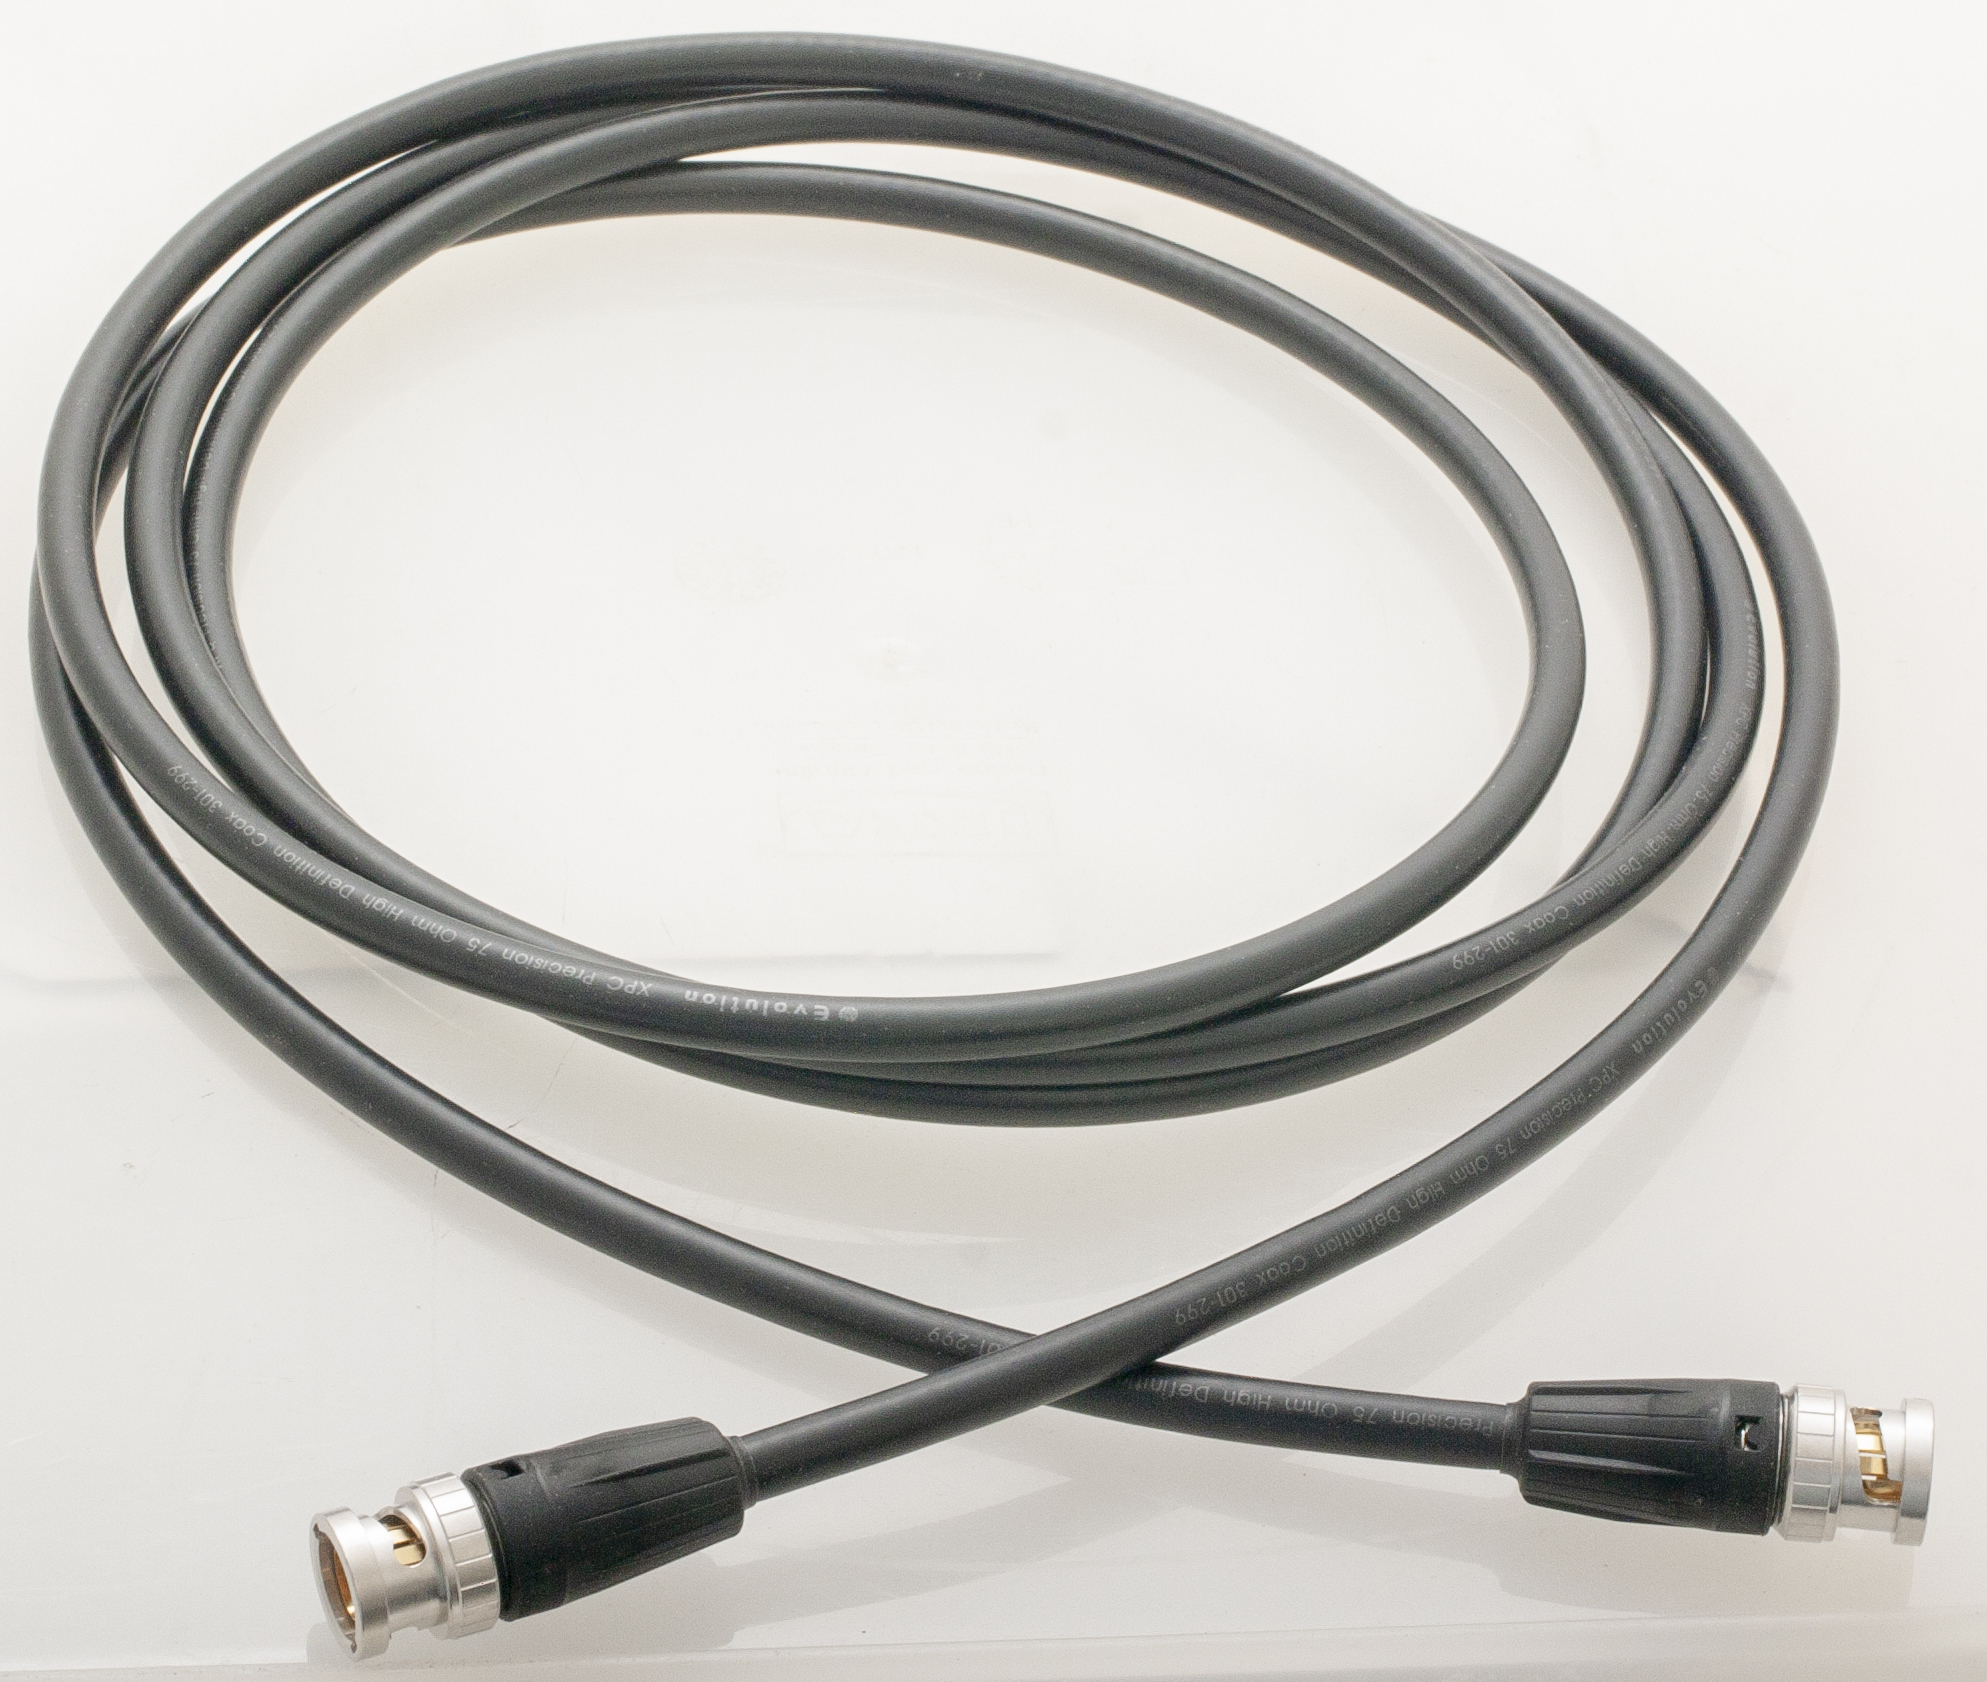 3G HD SDI Video Flexible Evolution 301-299 Cable with Neutrik UHD BNC Plugs 